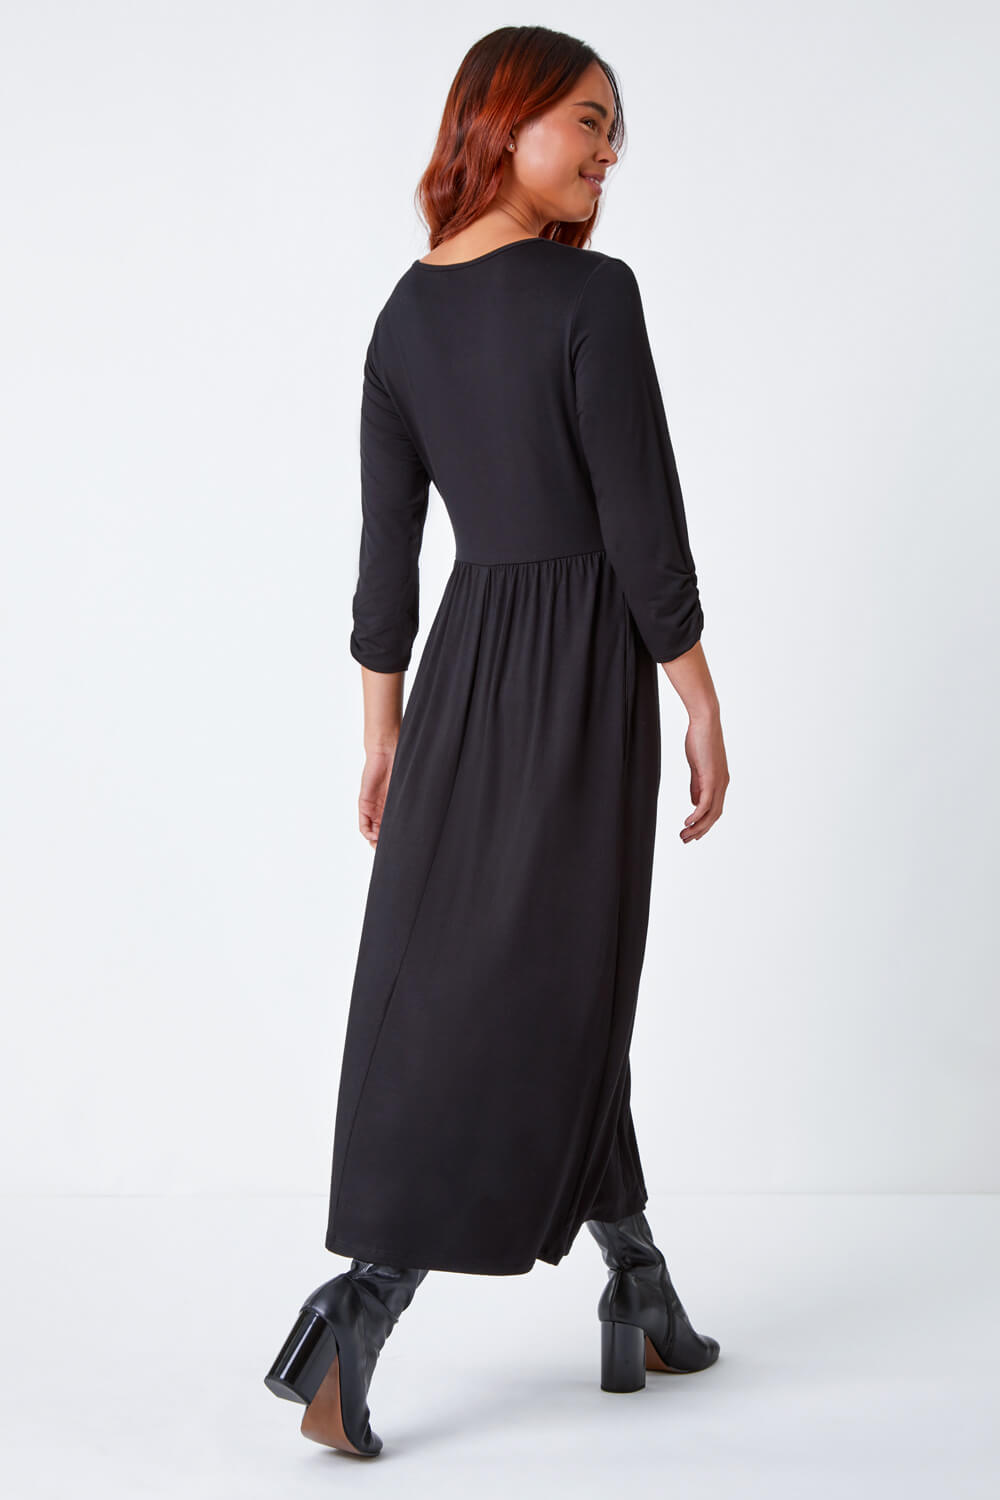 Petite Stretch Jersey Midi Dress in Black - Roman Originals UK